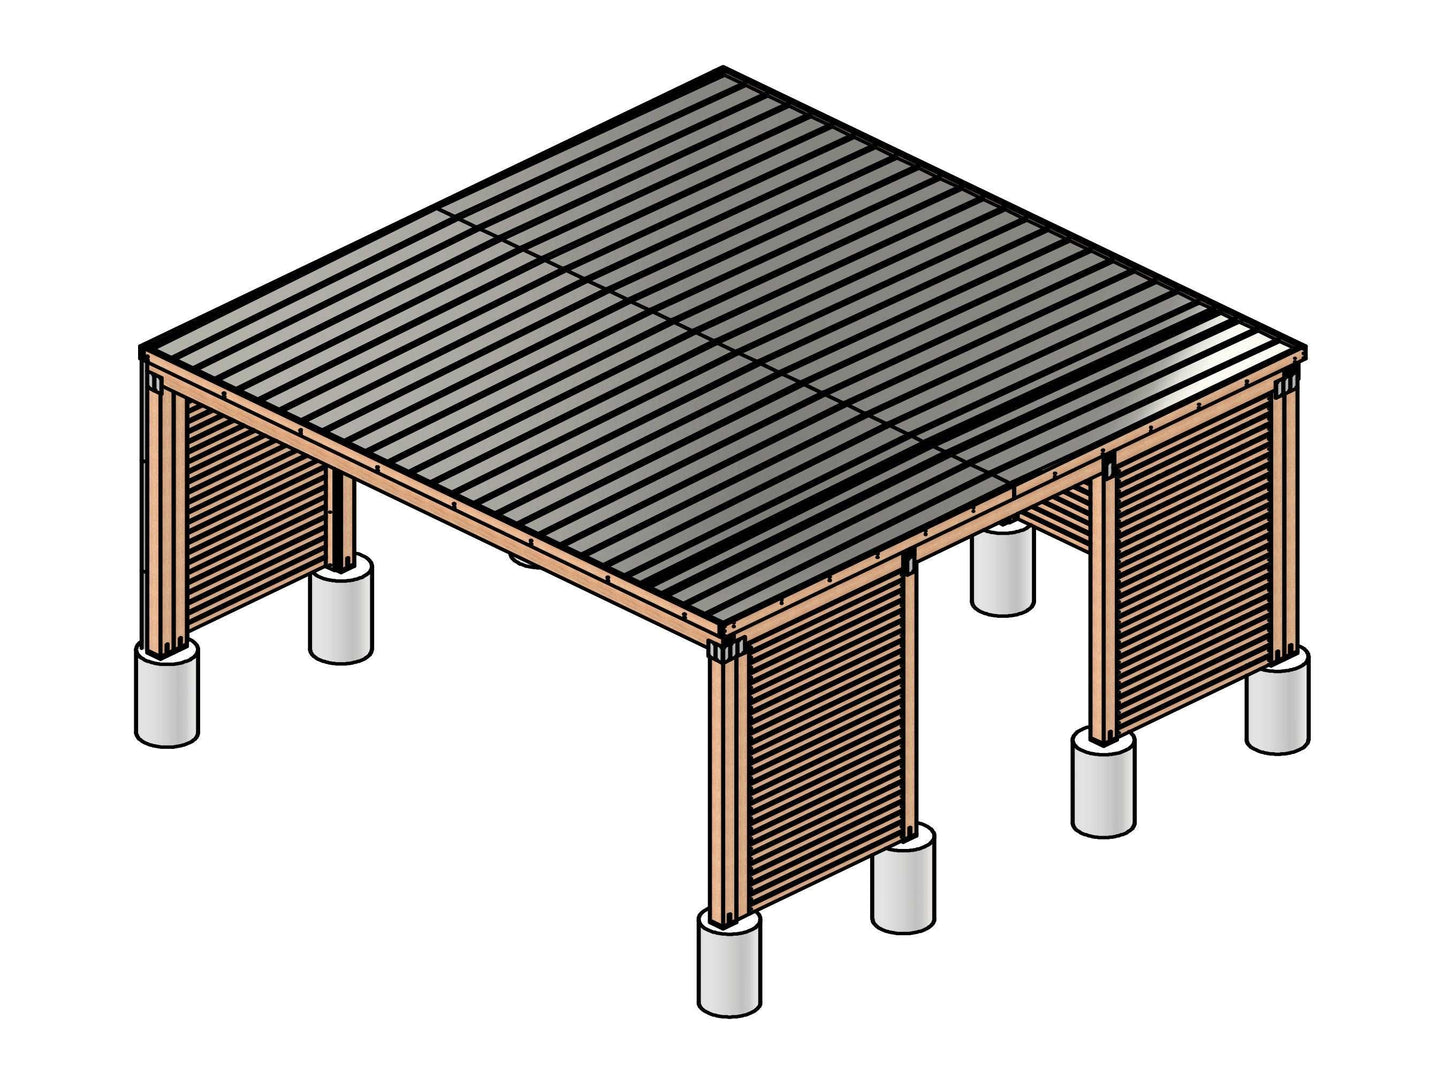 20x20 Modern Car Garage plan - Car Garage for two Car - Modern Pavilion Plans - Wooden Car Port